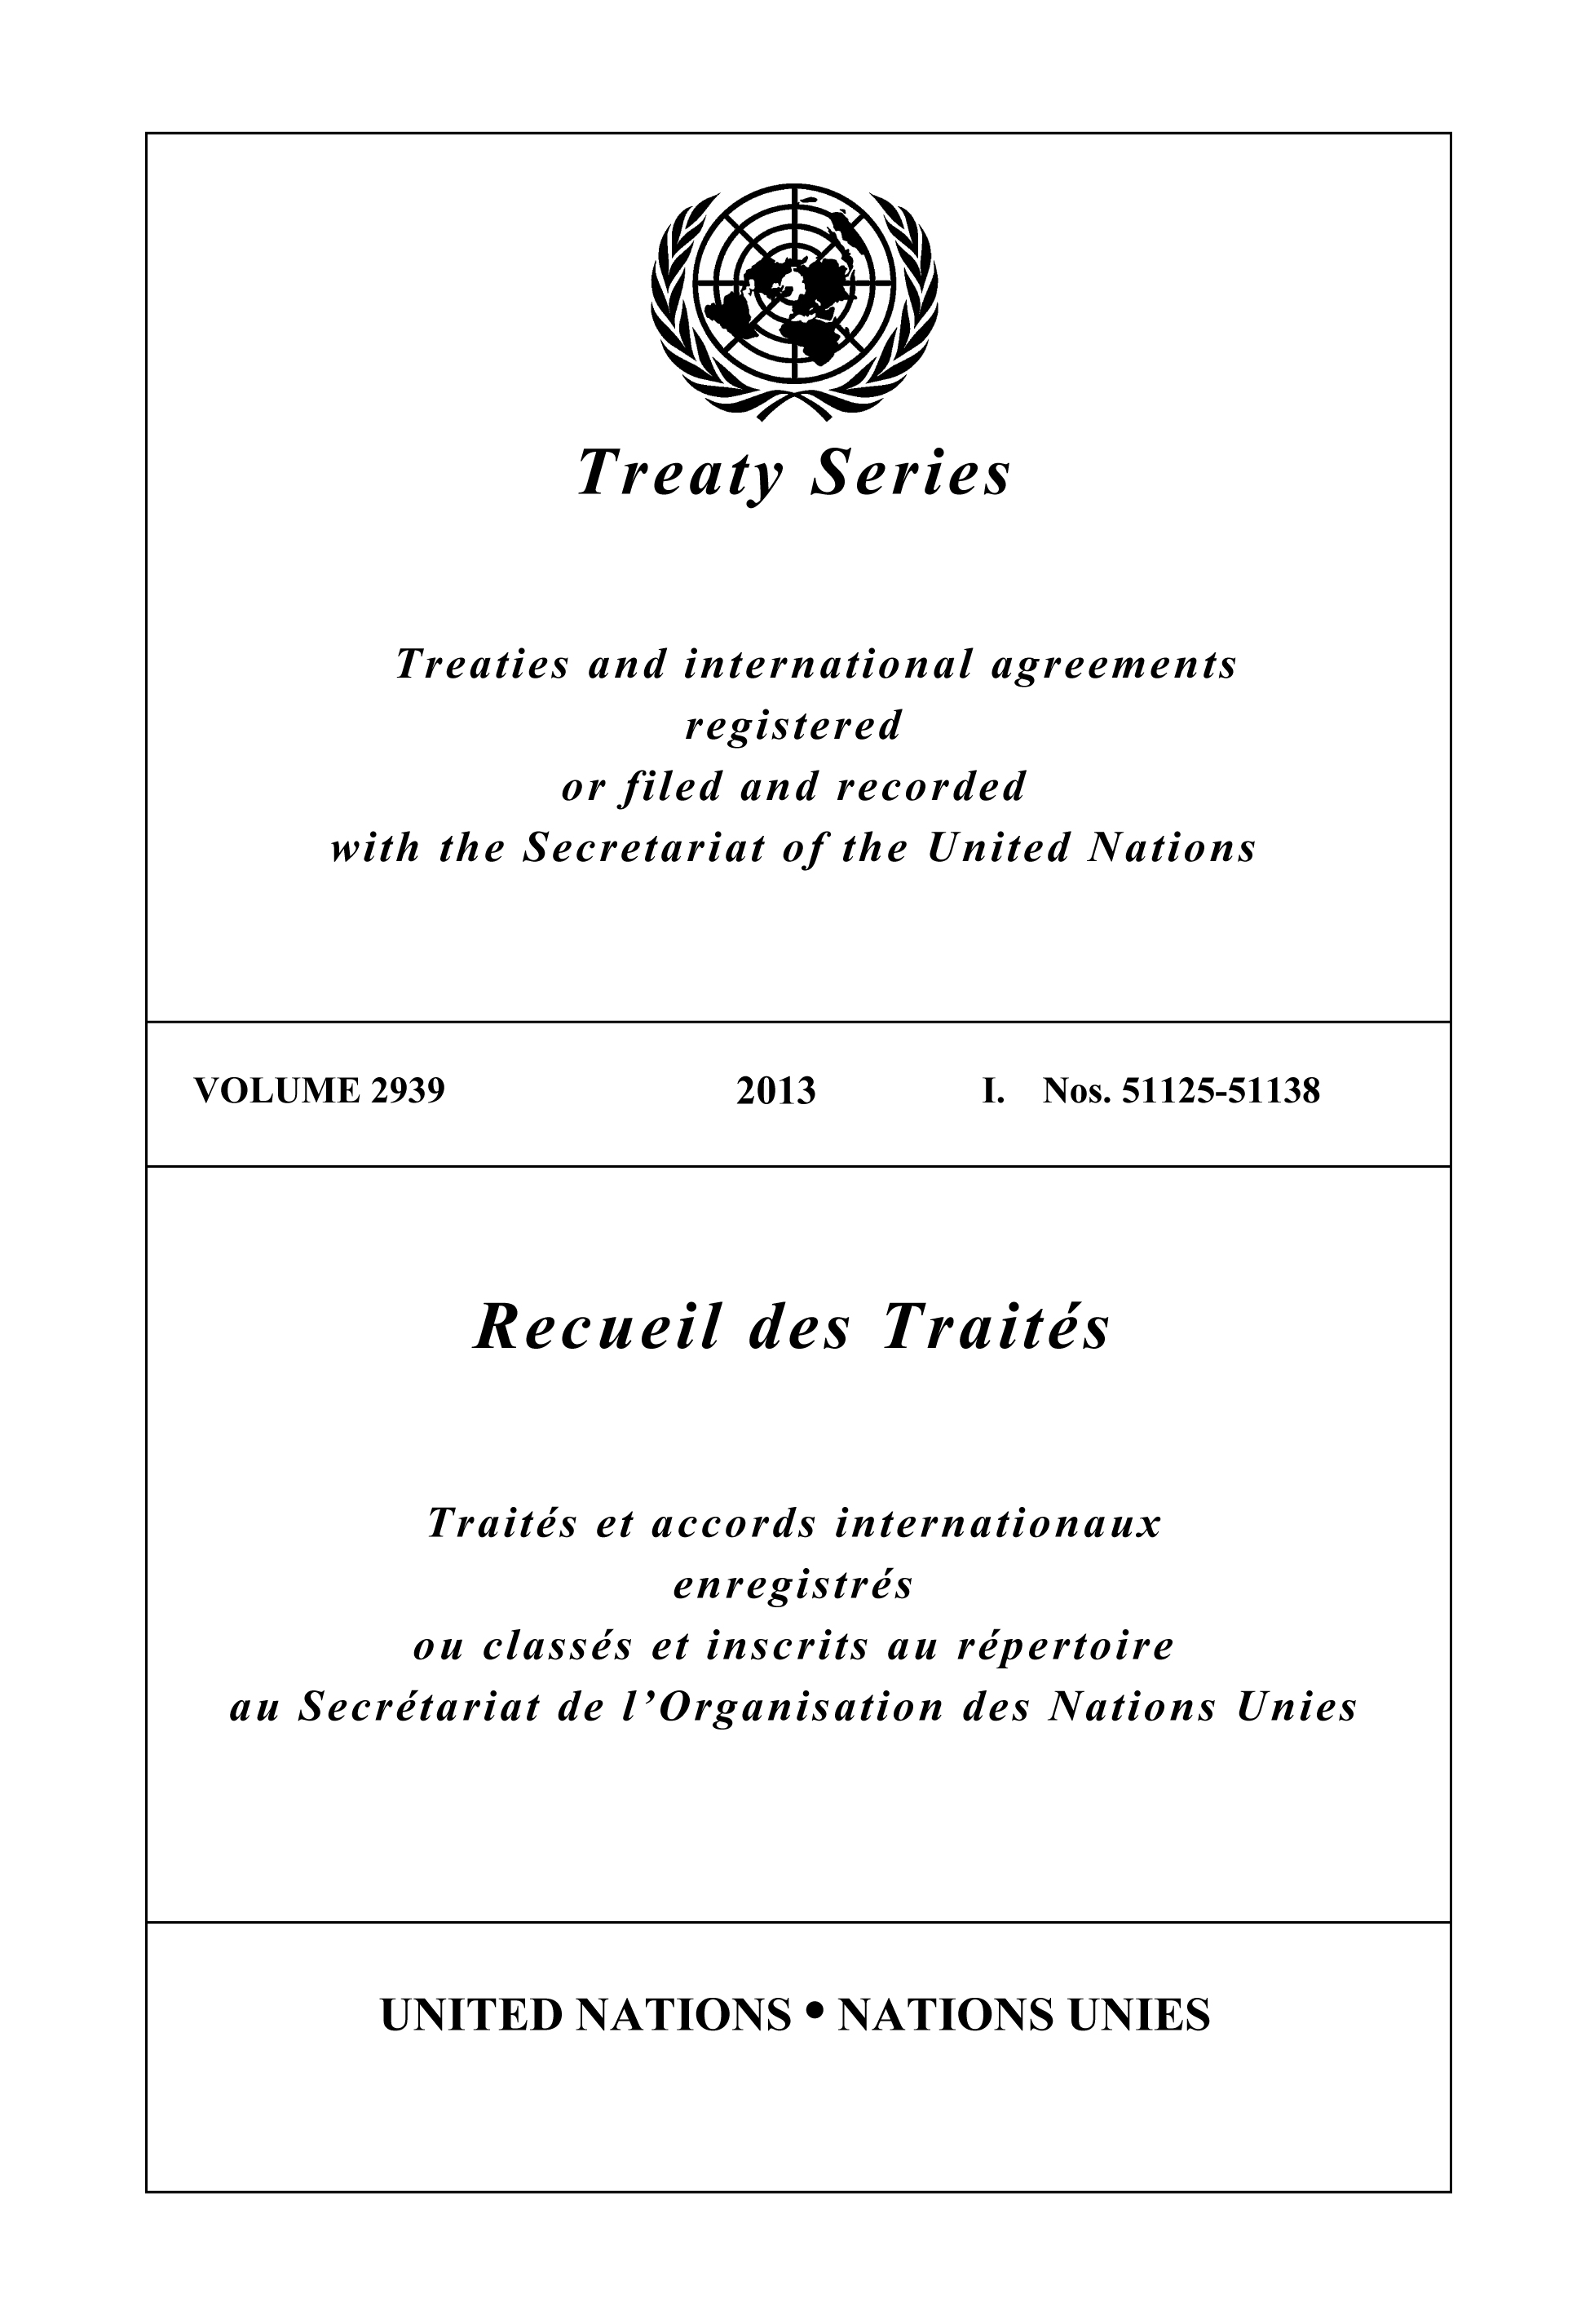 image of Treaty Series 2939